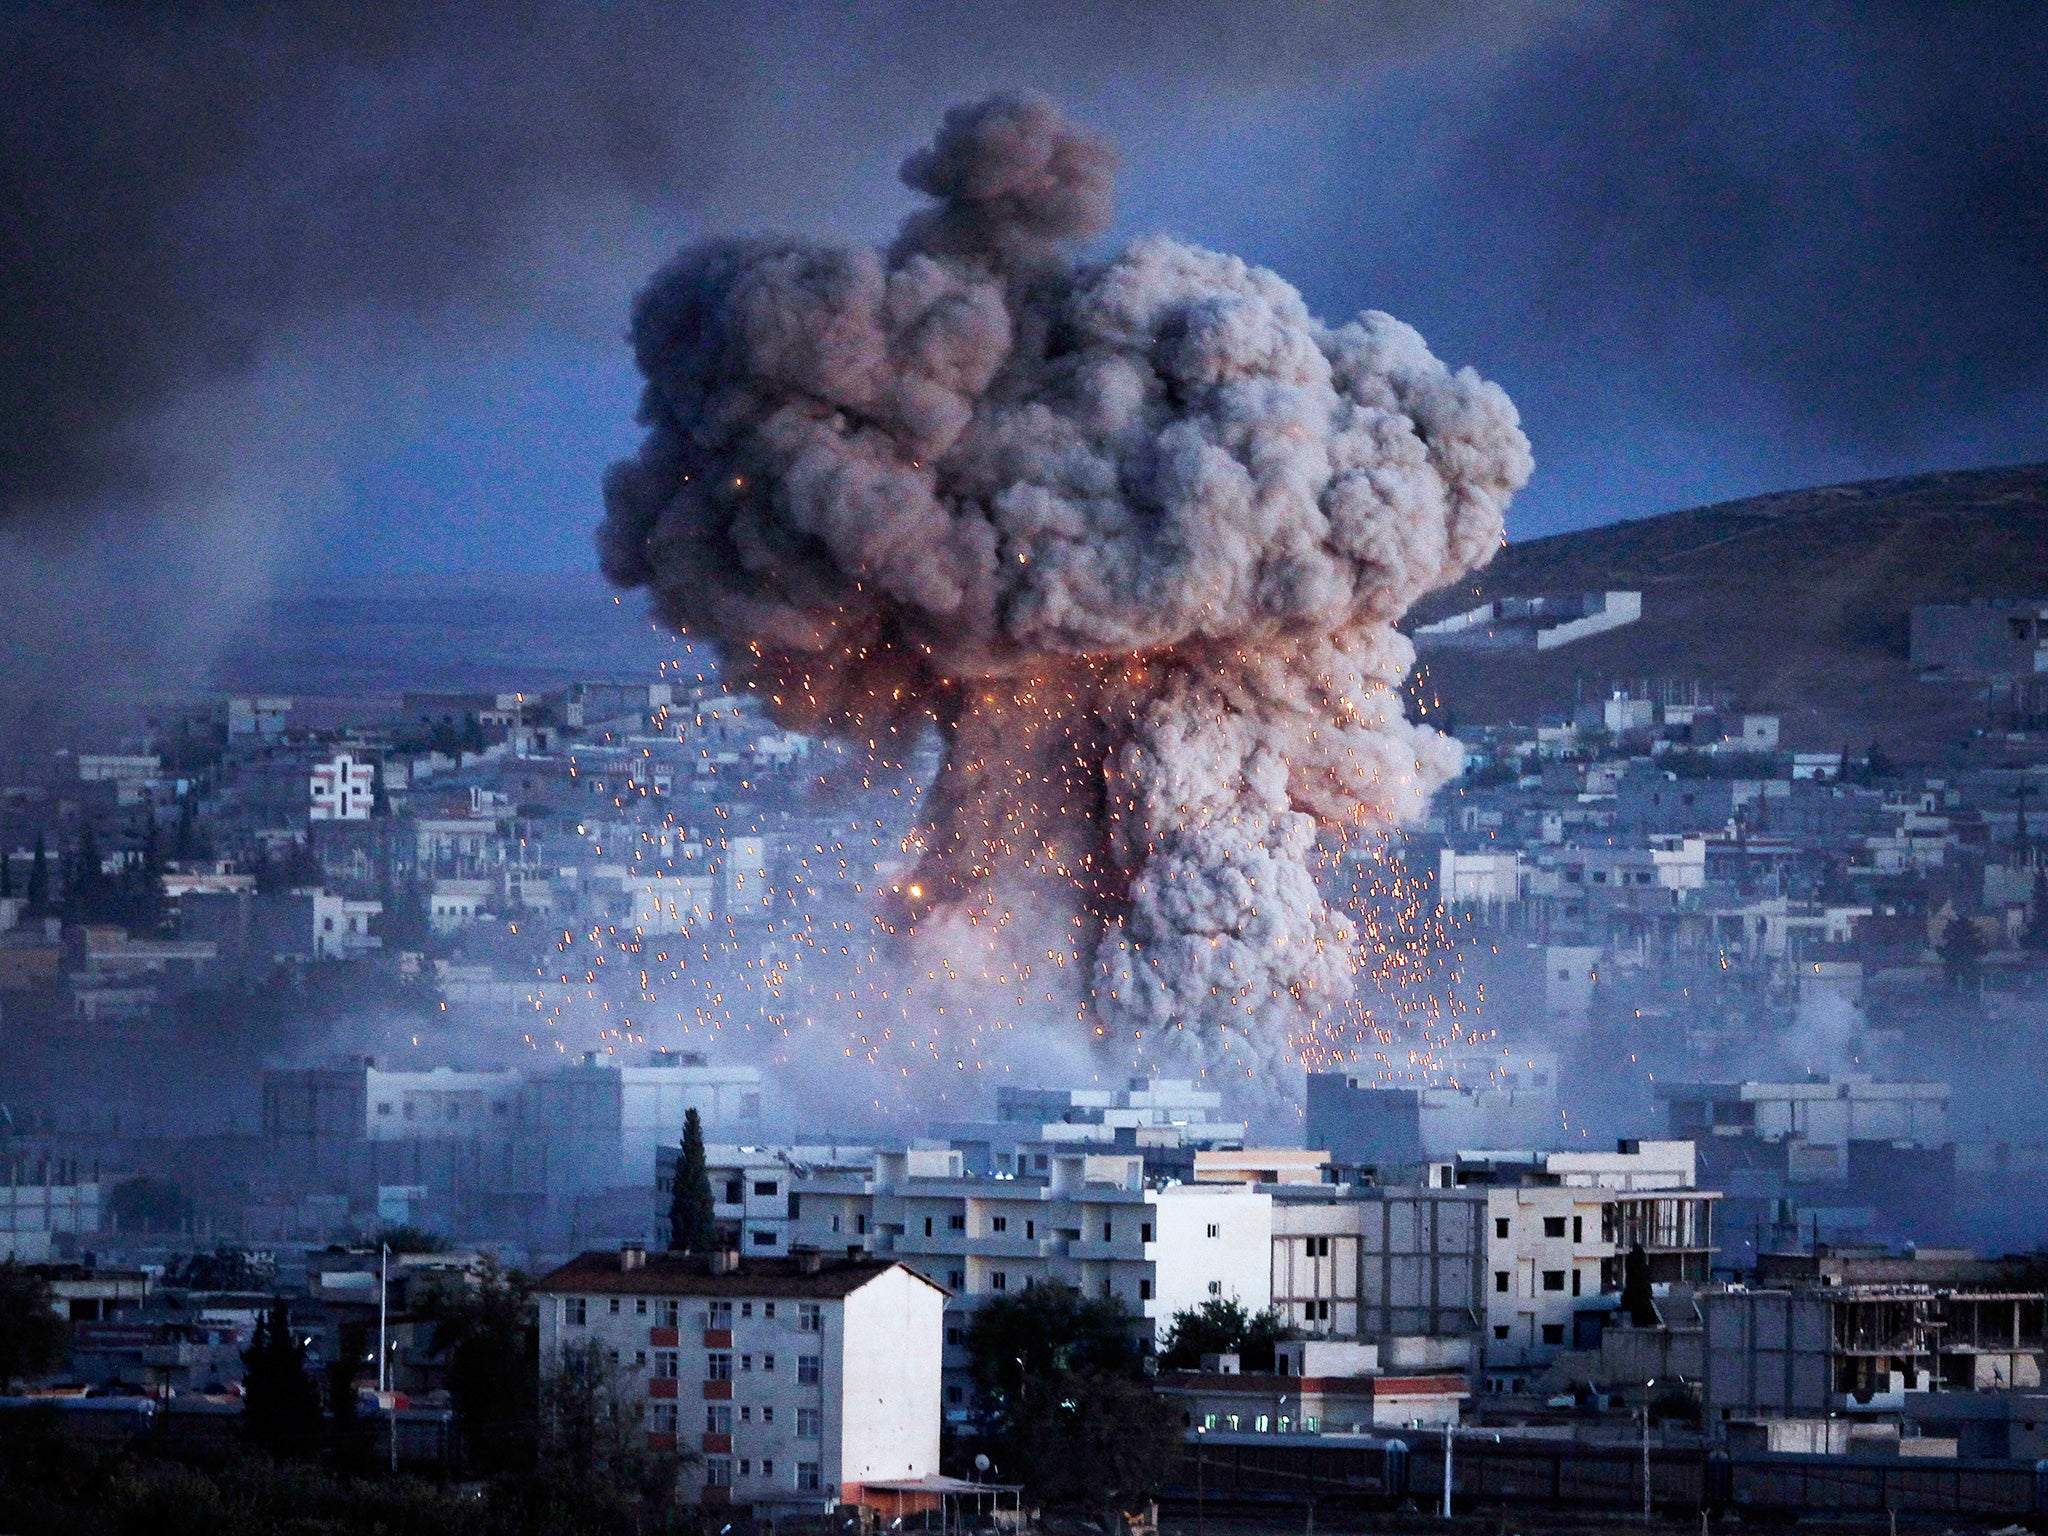 An explosion rocks Kobani during the siege